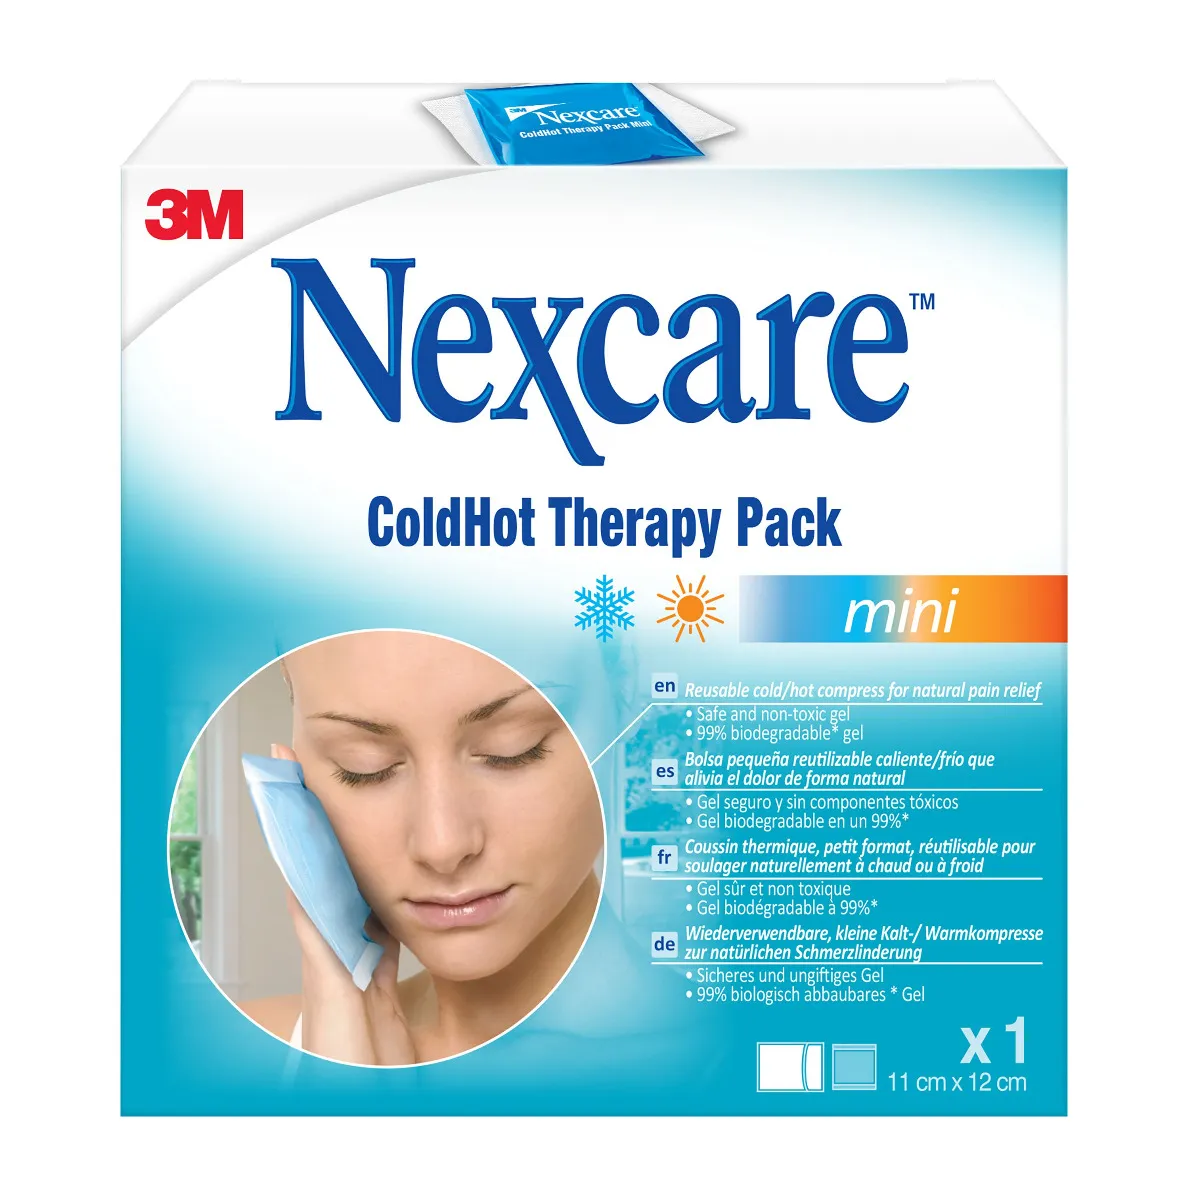 3M Nexcare ColdHot Therapy Pack Mini 11x12 cm gelový obklad 1 ks